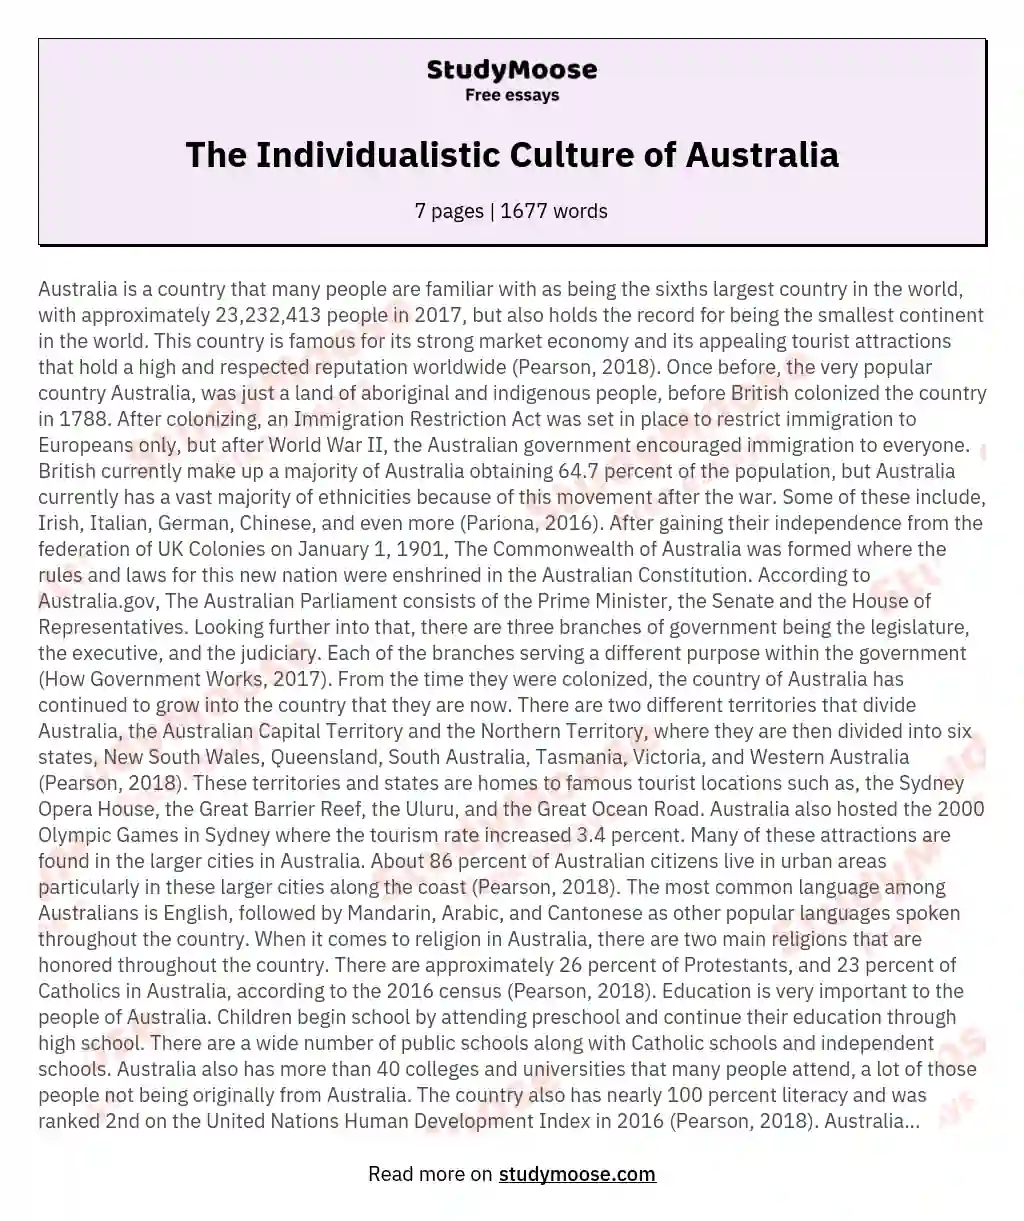 The Individualistic Culture of Australia essay